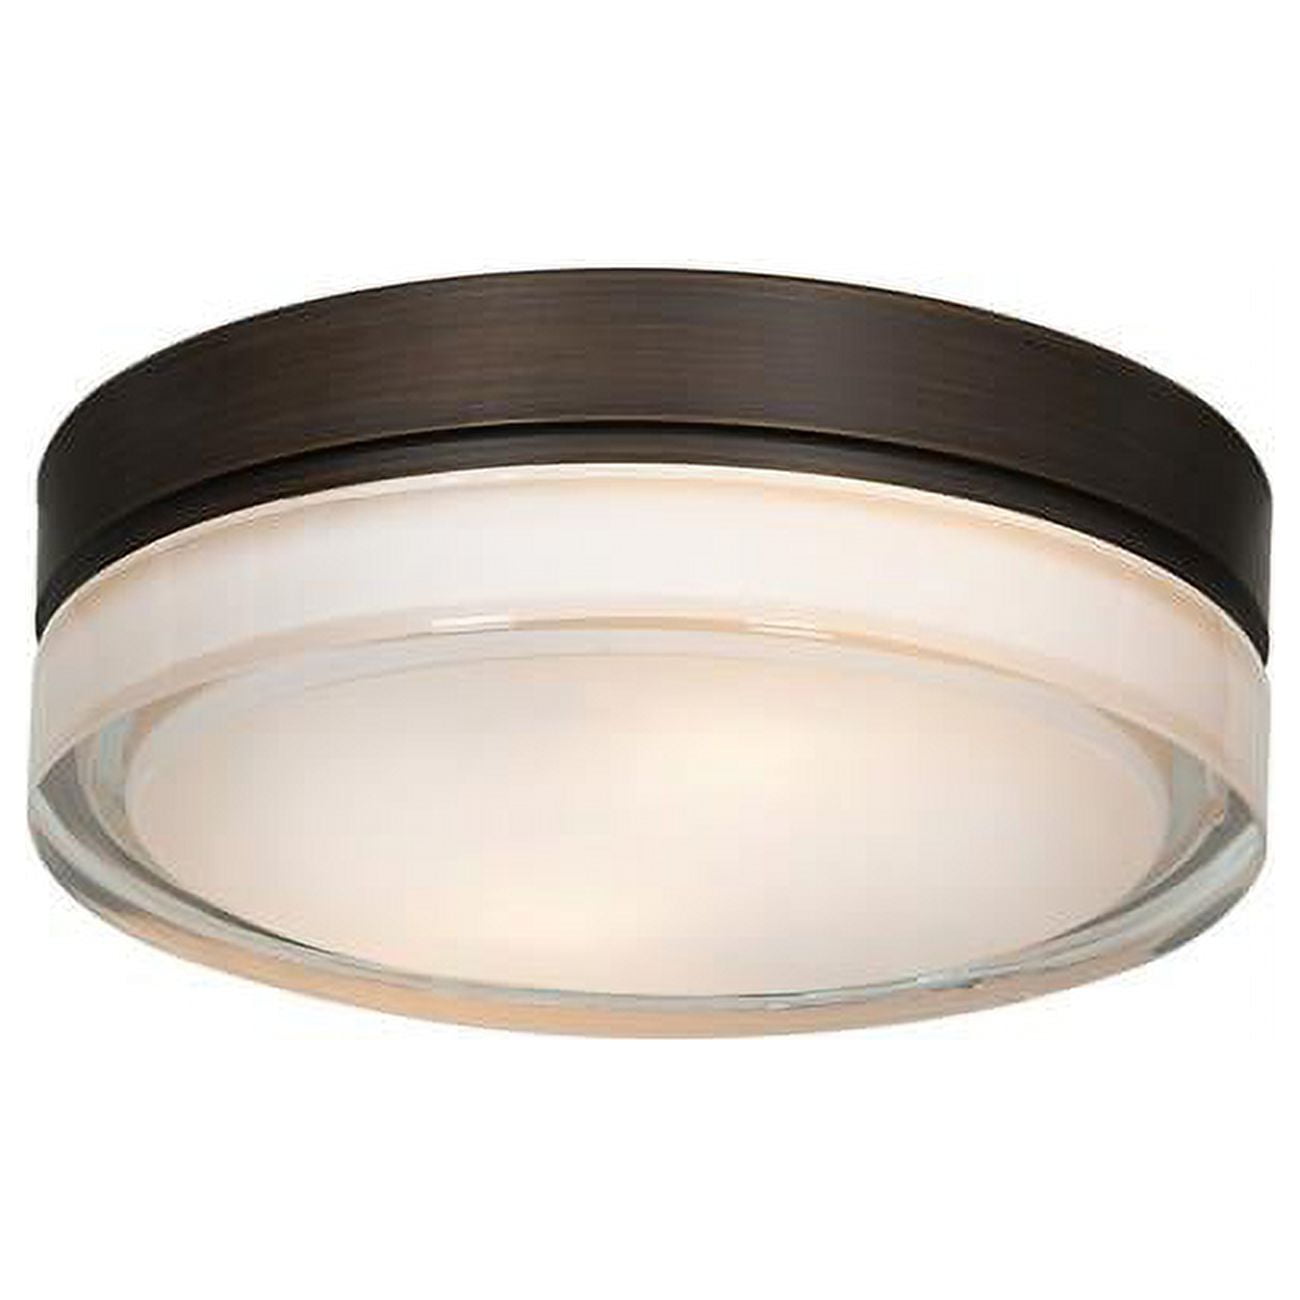 Picture of Access Lighting 20775LEDD-BRZ-OPL Solid LED Bronze Flush Mount Ceiling Light